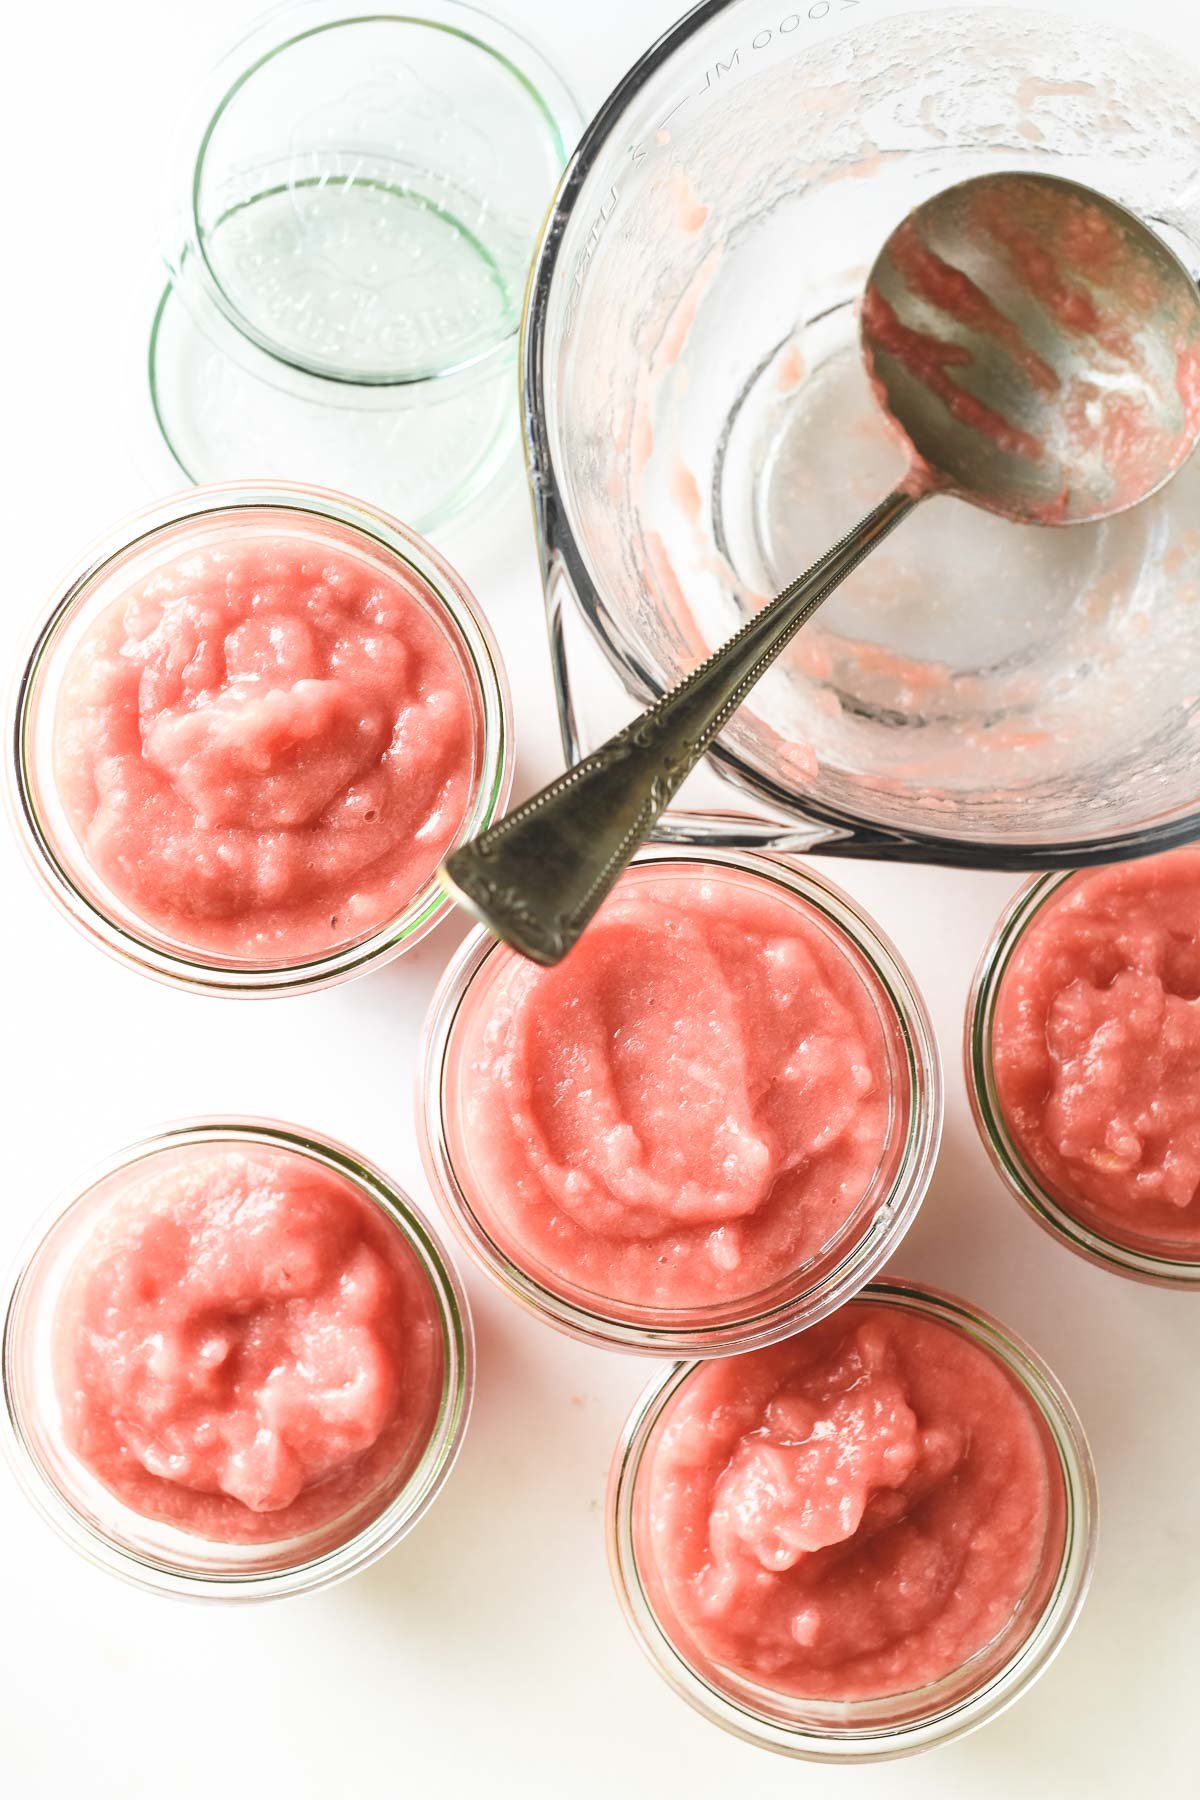 rhubarb applesauce in jars with ladle.